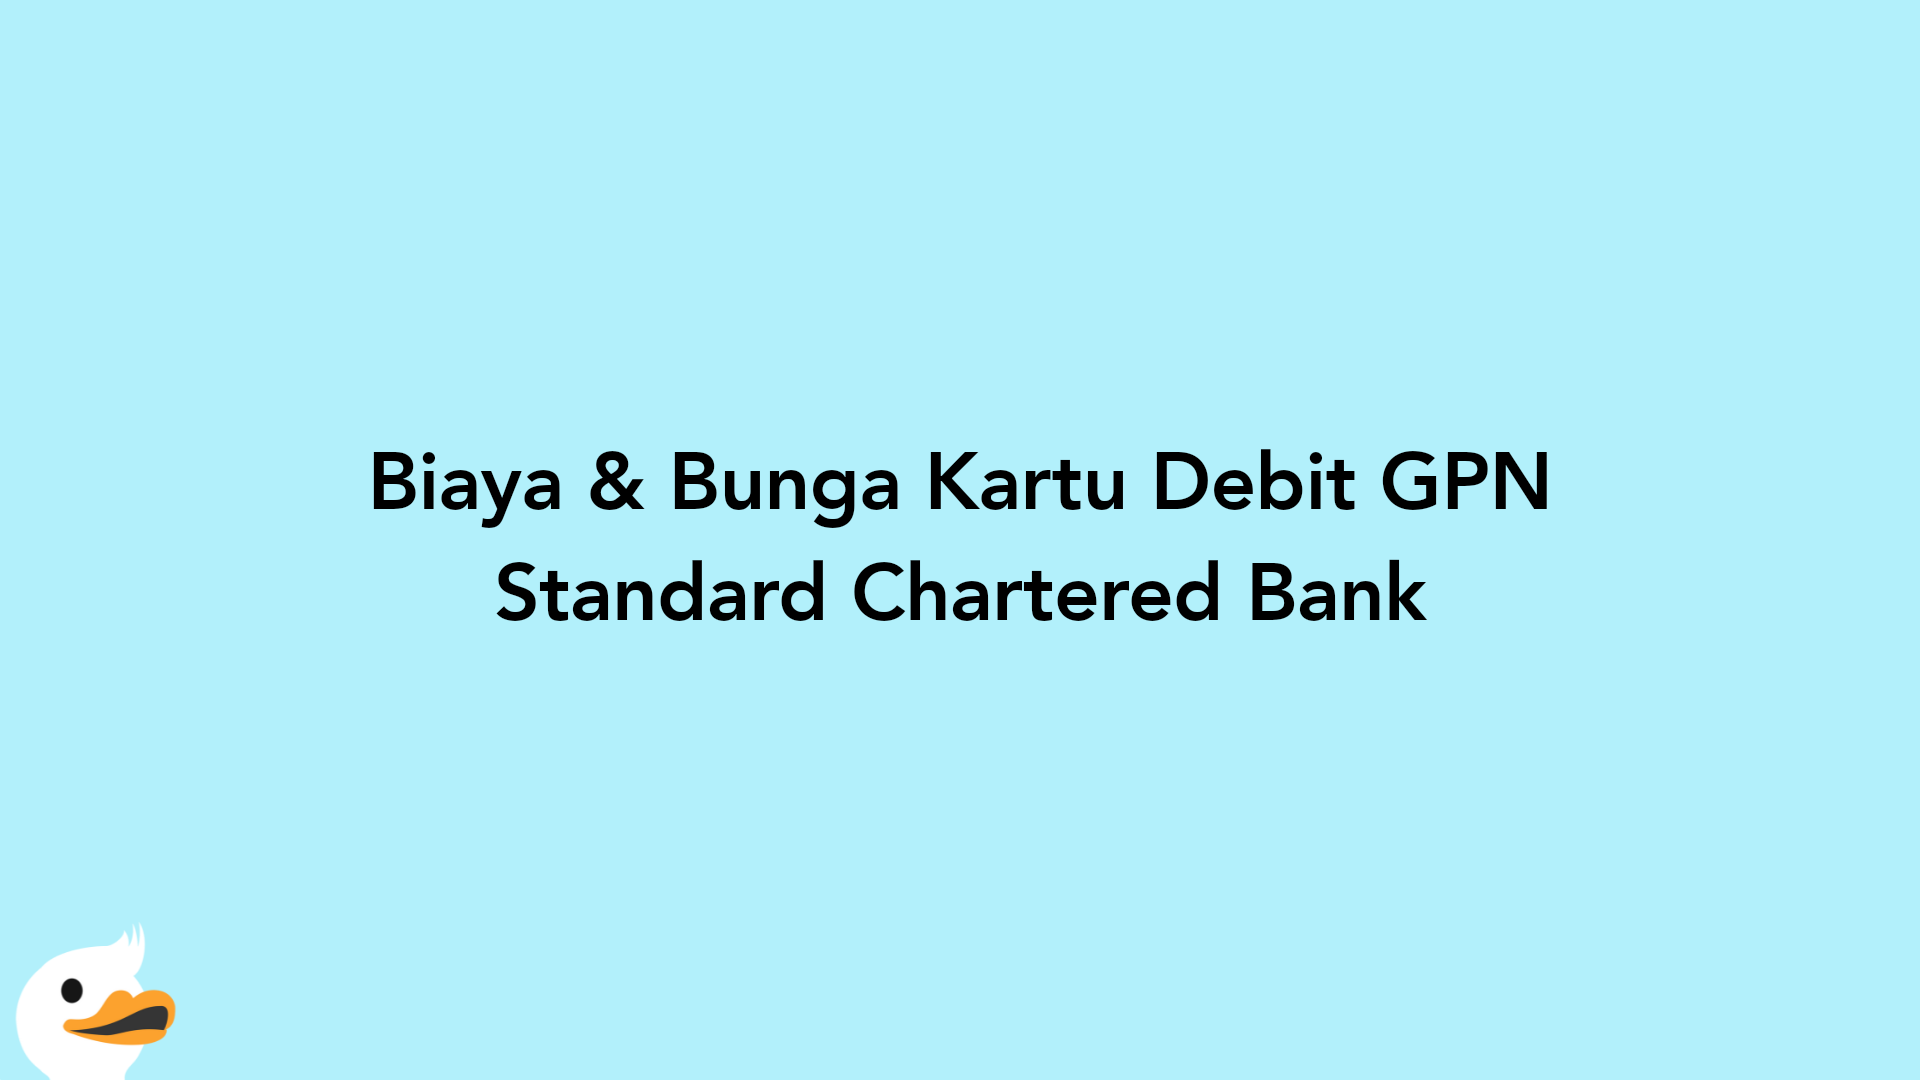 Biaya & Bunga Kartu Debit GPN Standard Chartered Bank